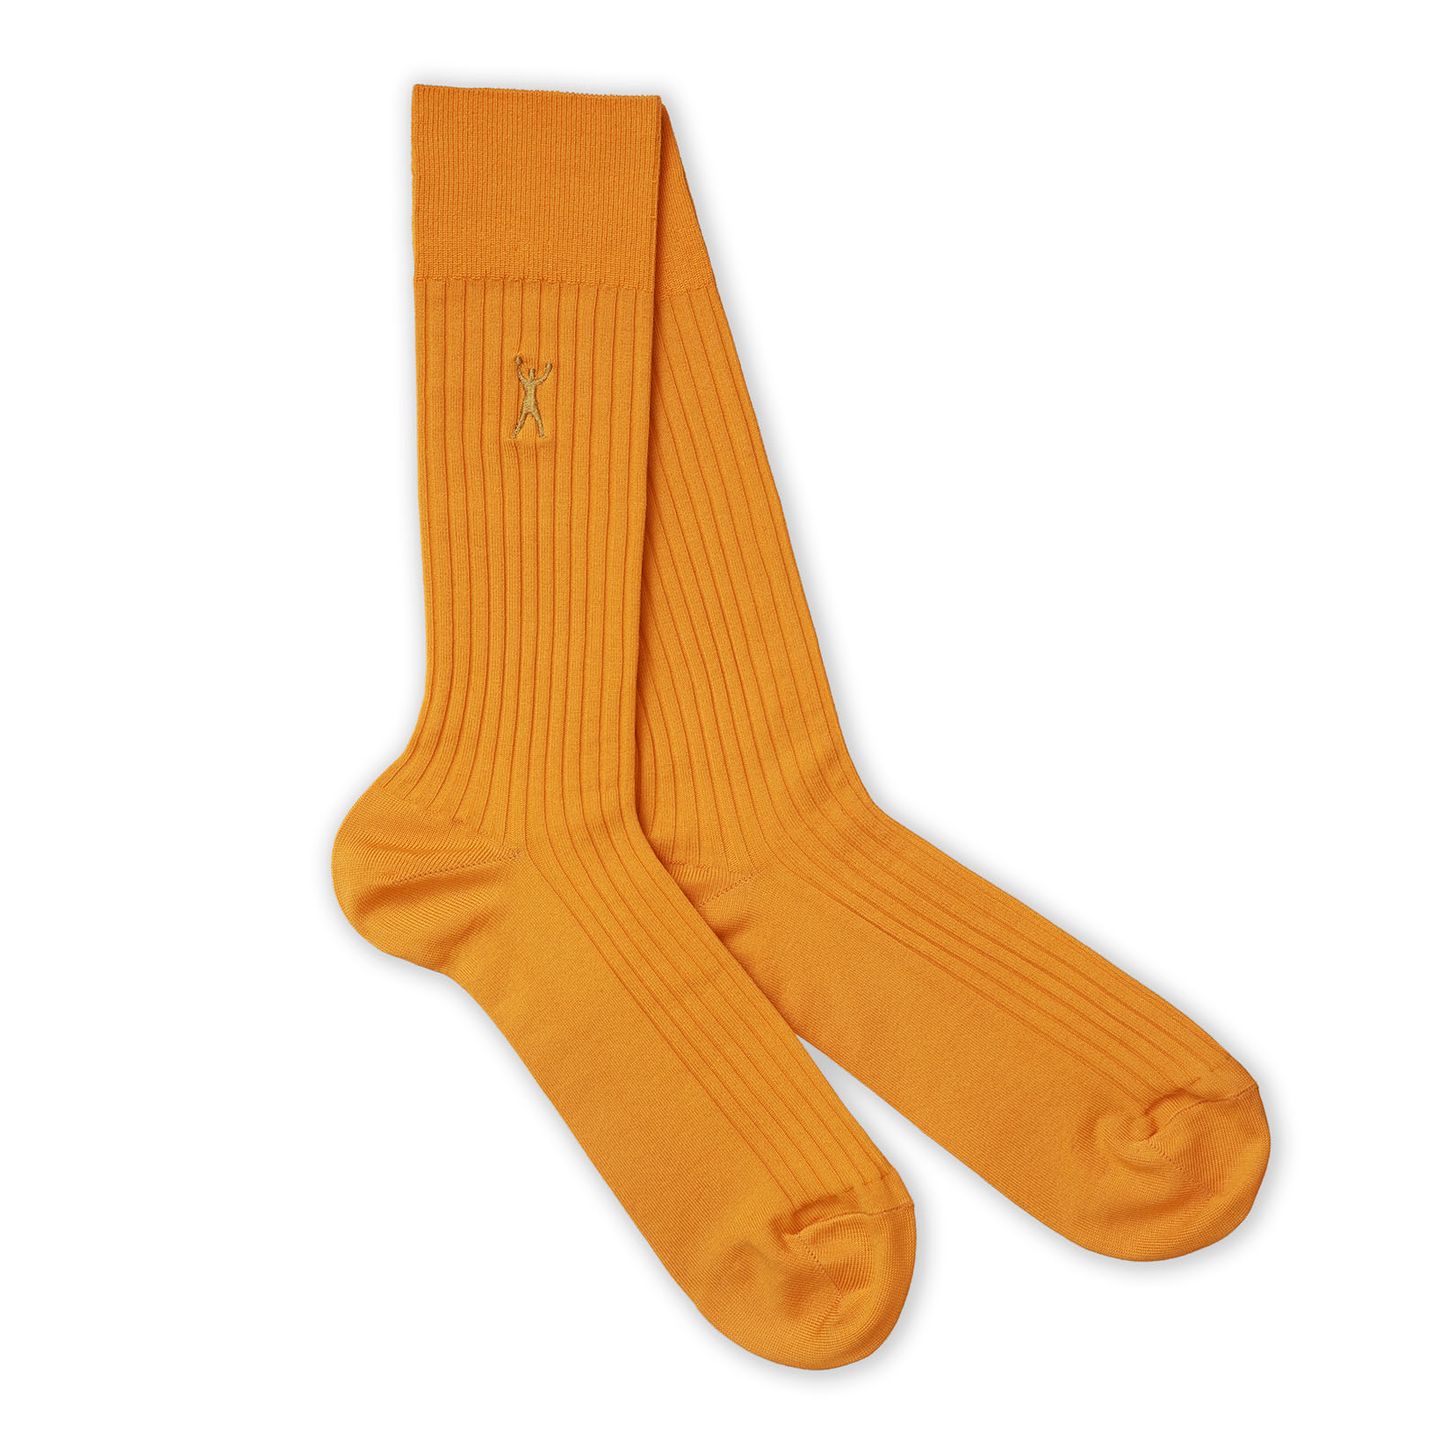 A pair of bright orange socks